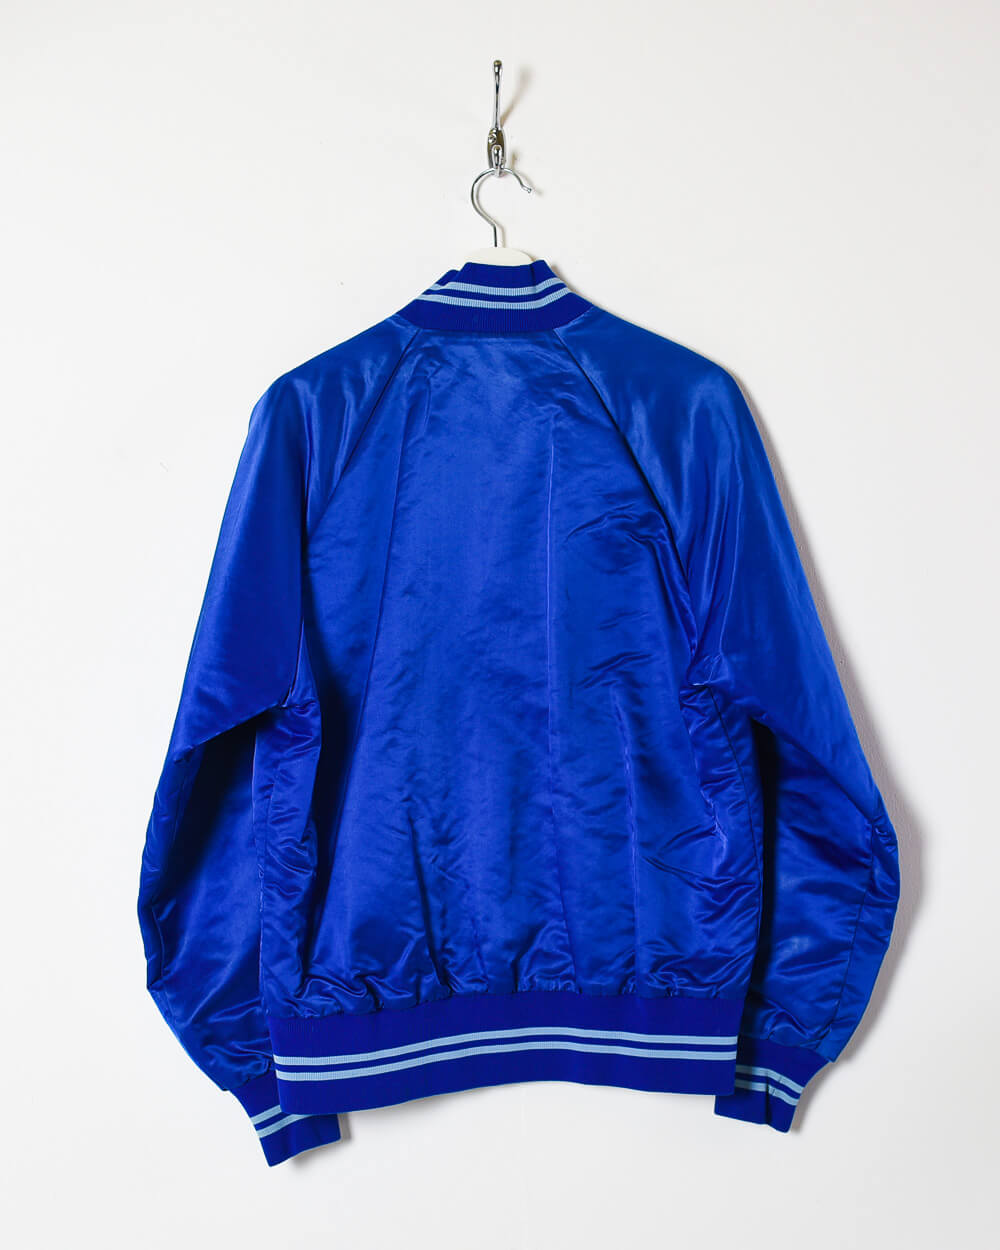 Blue Starter Toronto Blue Jays Varsity Jacket - Medium